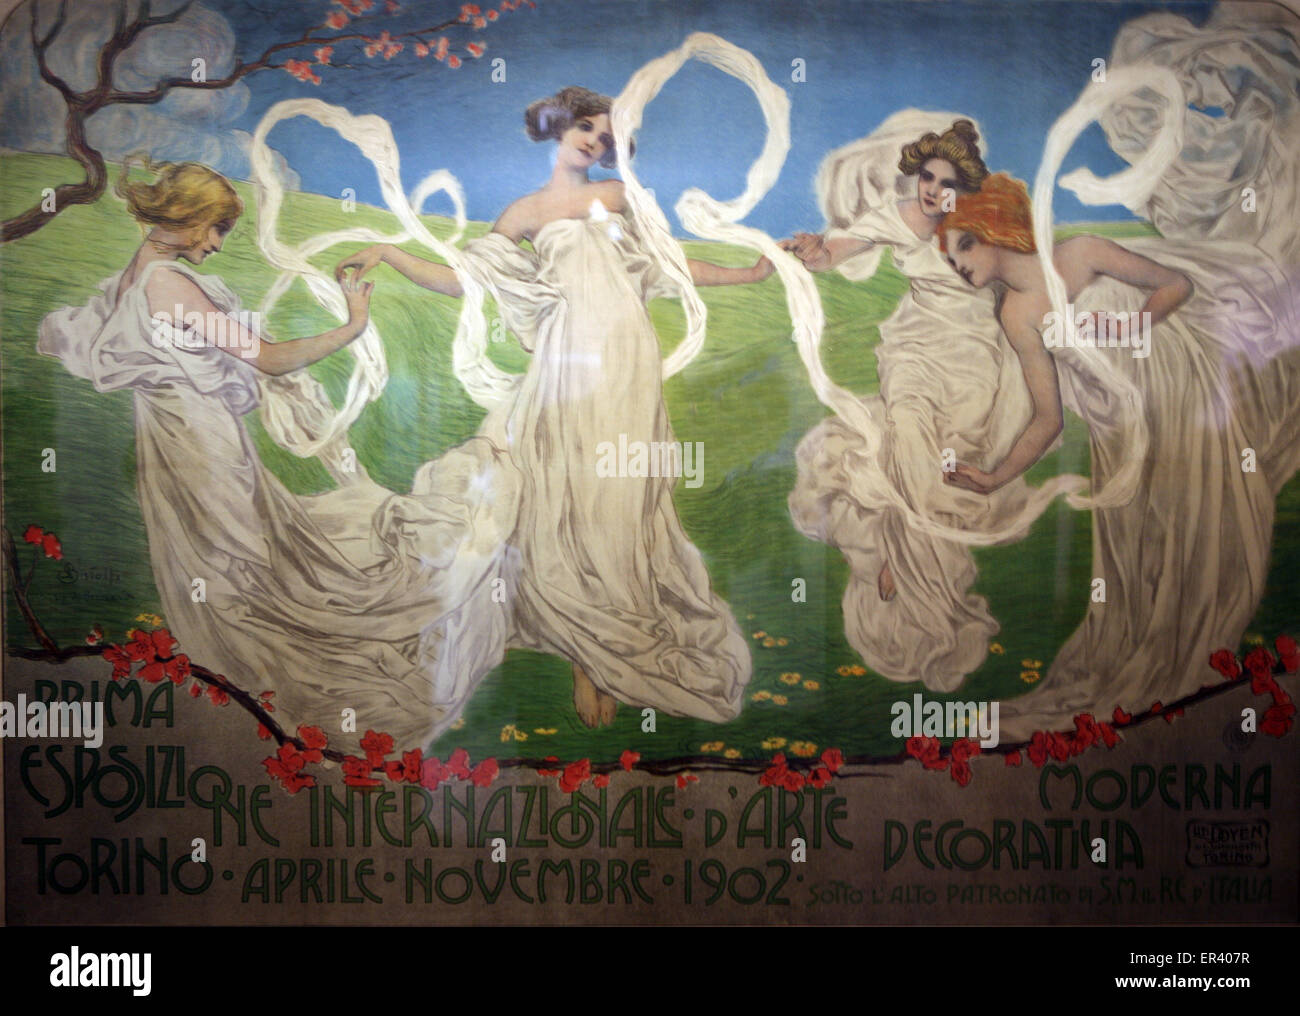 First international decorative art exhibition Turin 1902 poster Stock Photo